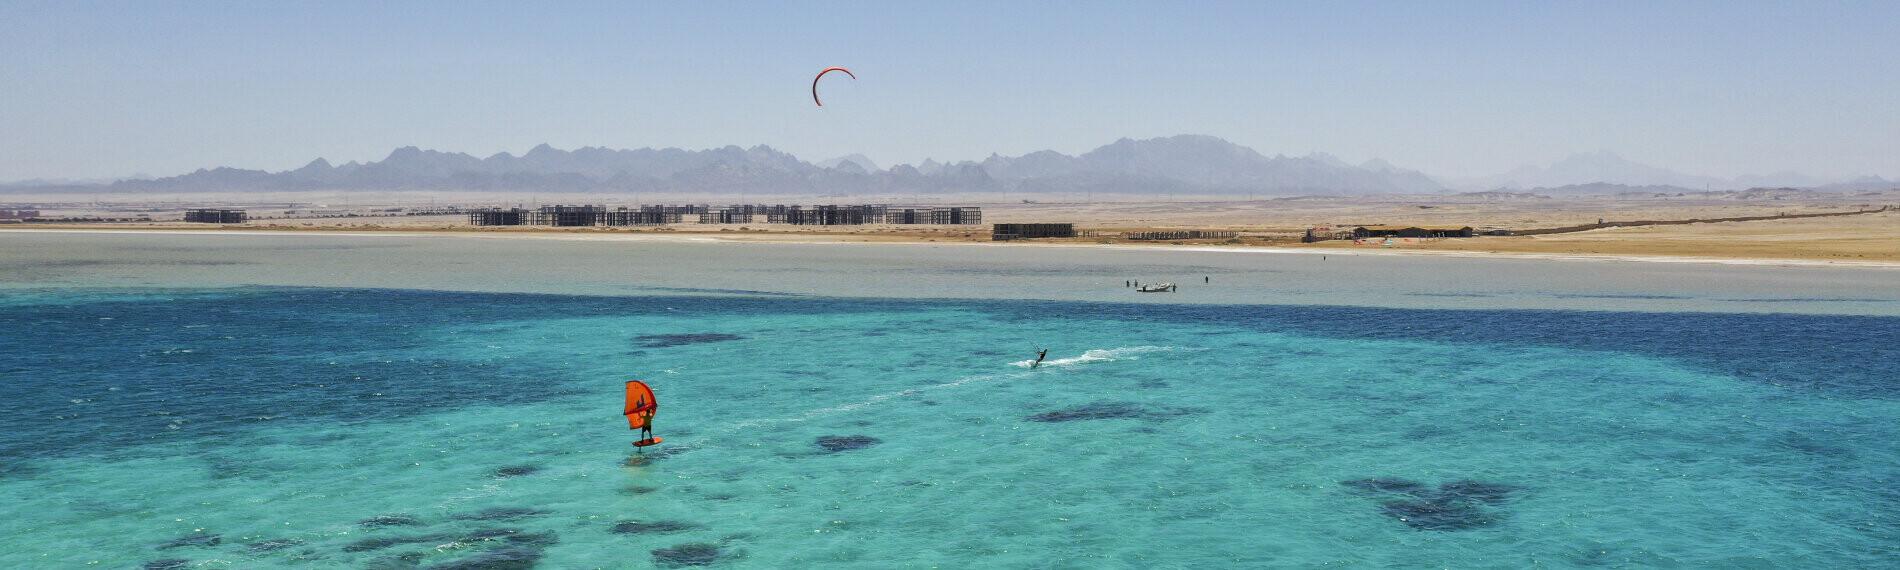 Kitesurfer in Ras Soma, Ägypten auf türkisfarbenem Meer vor Wüstenkulisse.